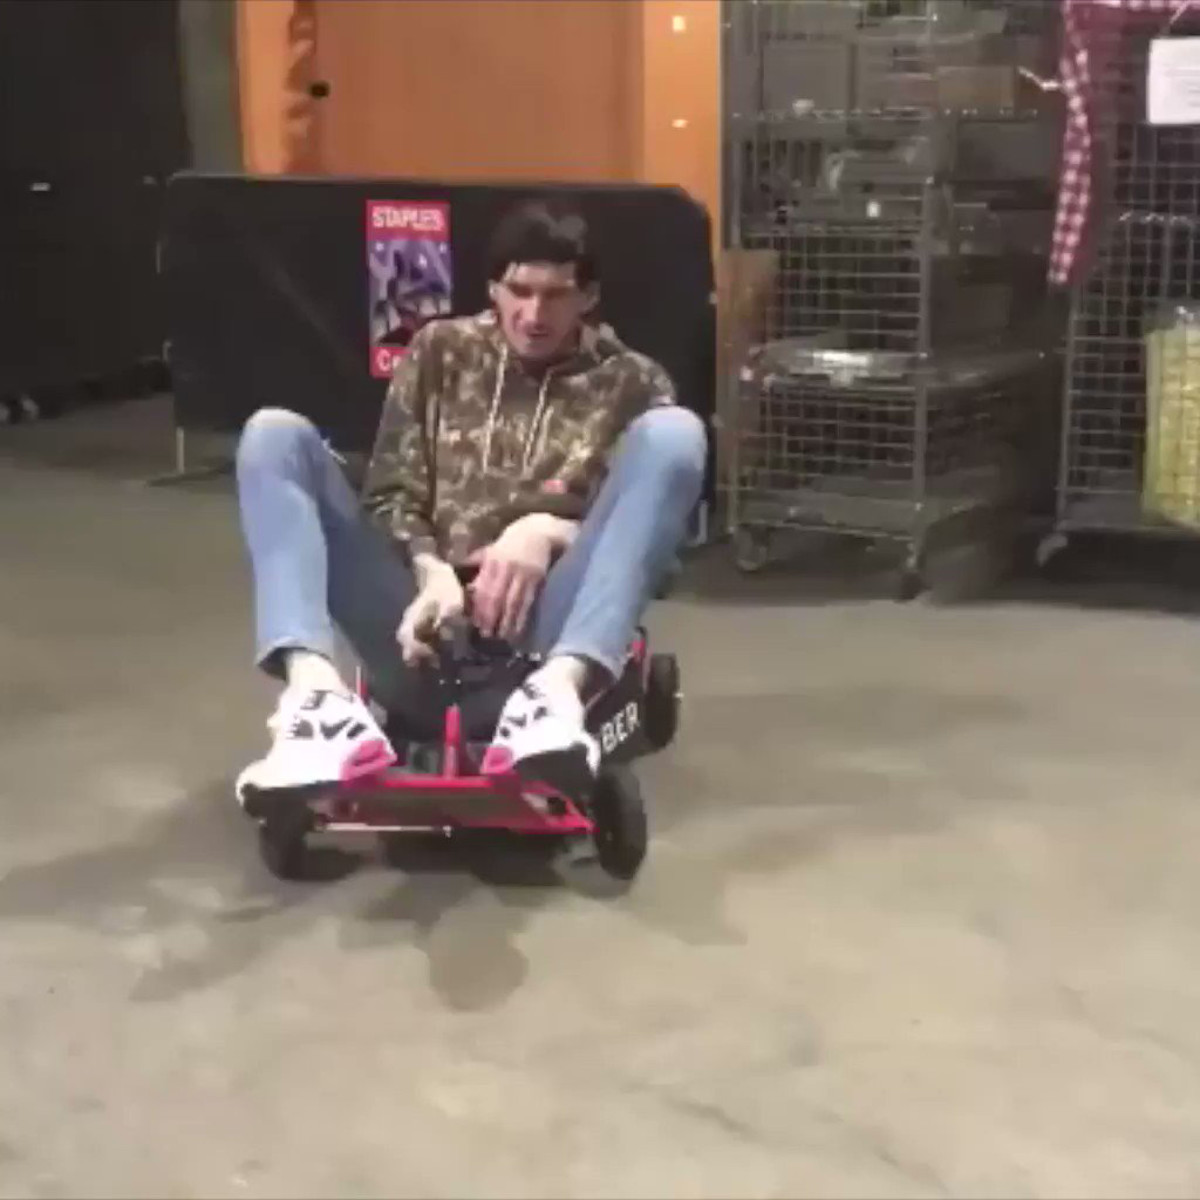 Seven foot-plus NBA player rides around arena in go-kart